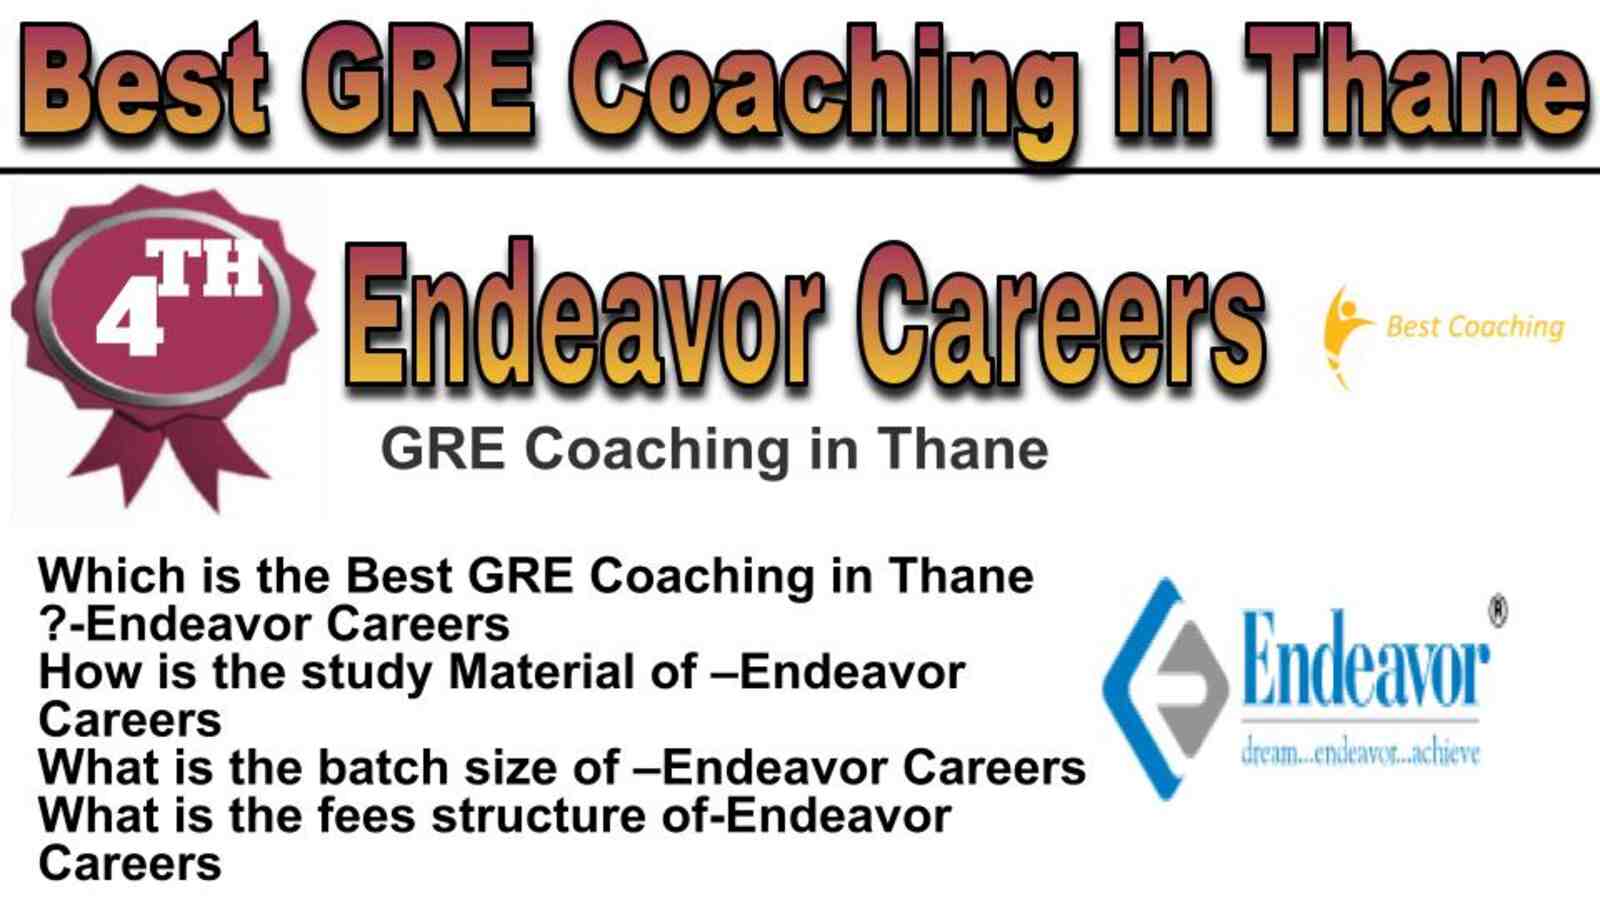 Rank 4 best GRE coaching in Thane